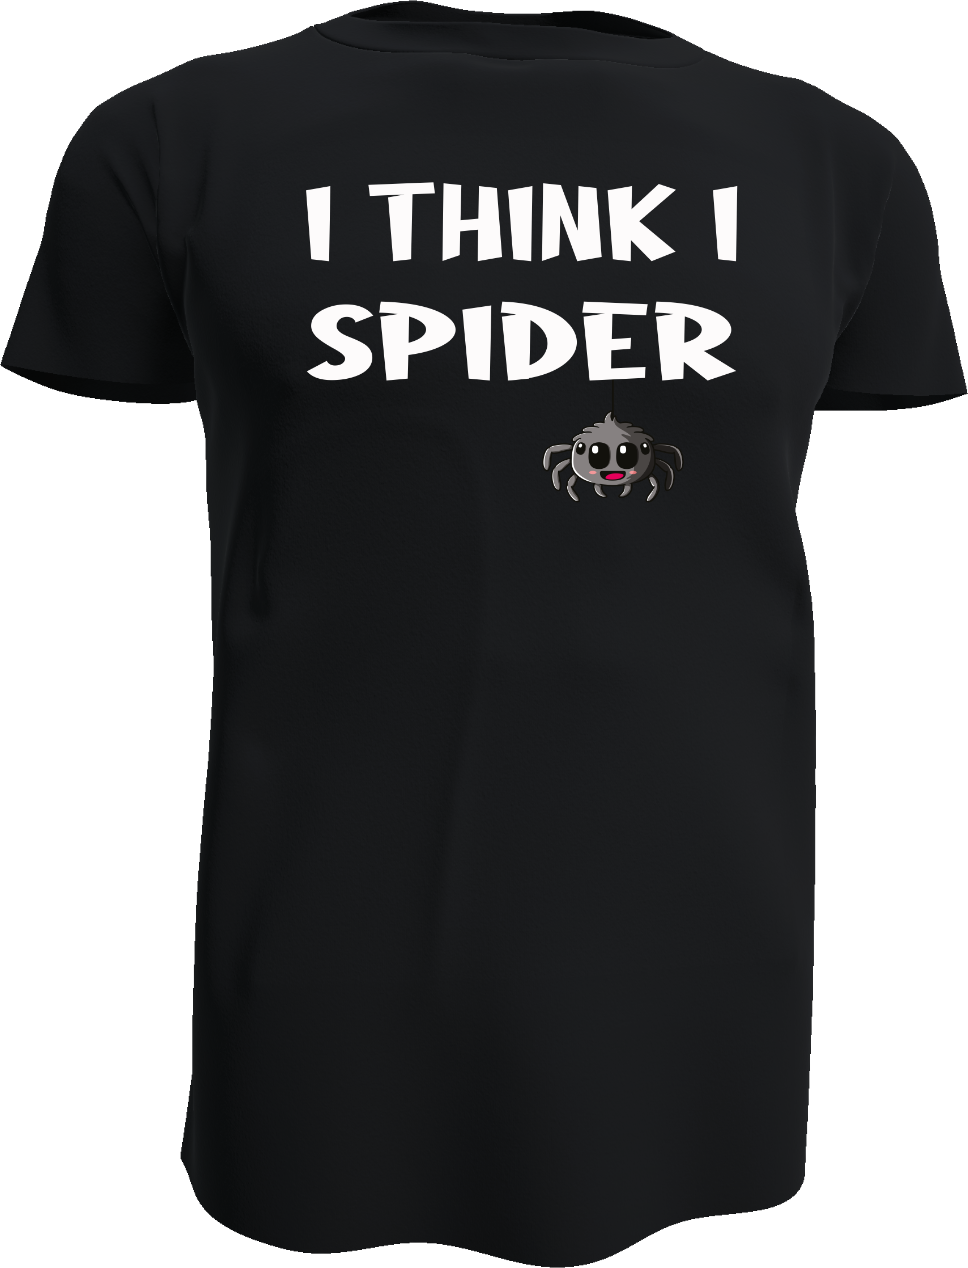 I think i Spider - Shirt